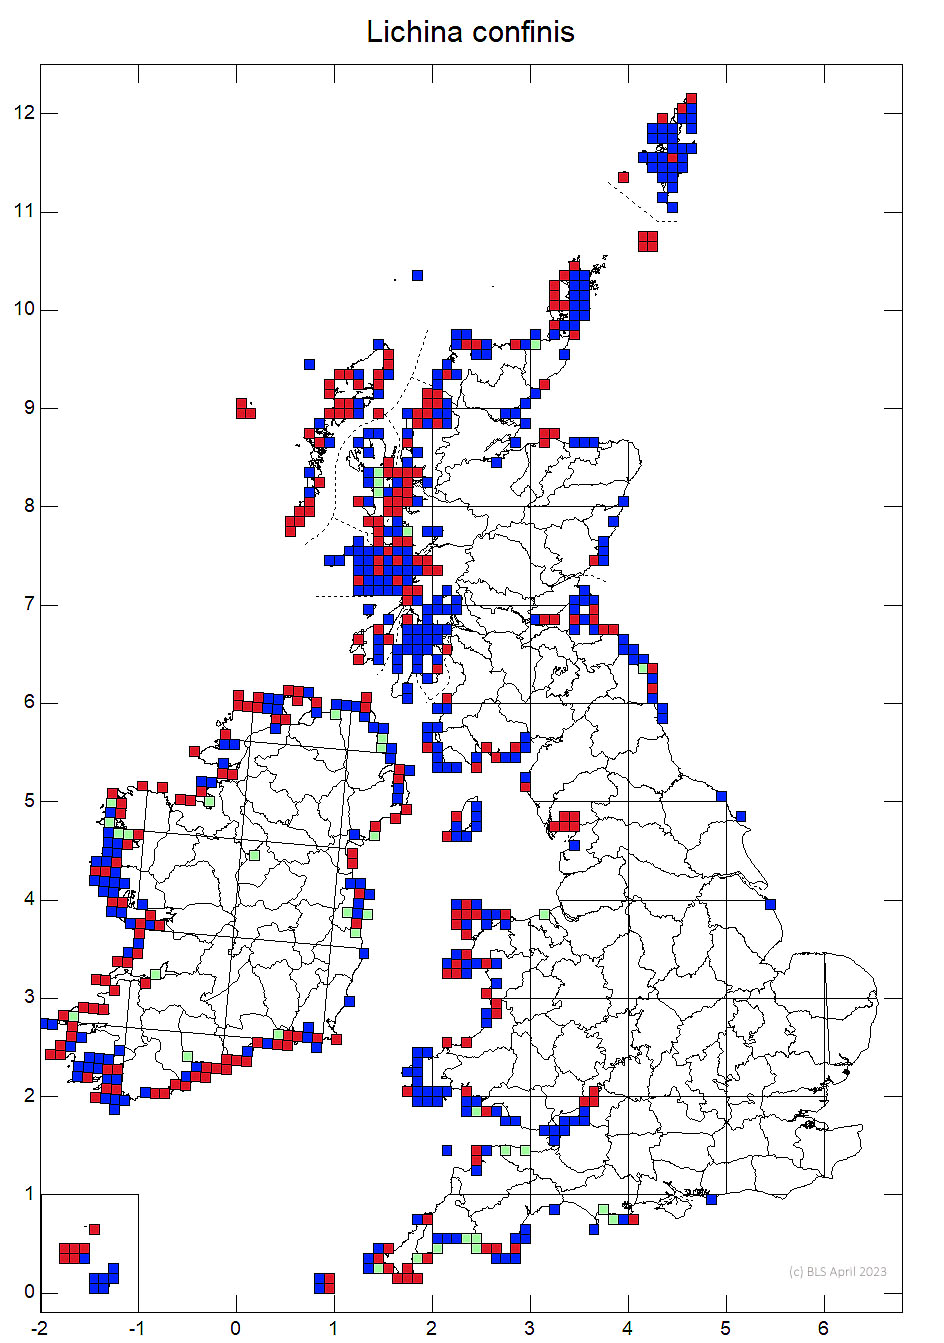 Lichina confinis 10km sq distribution map